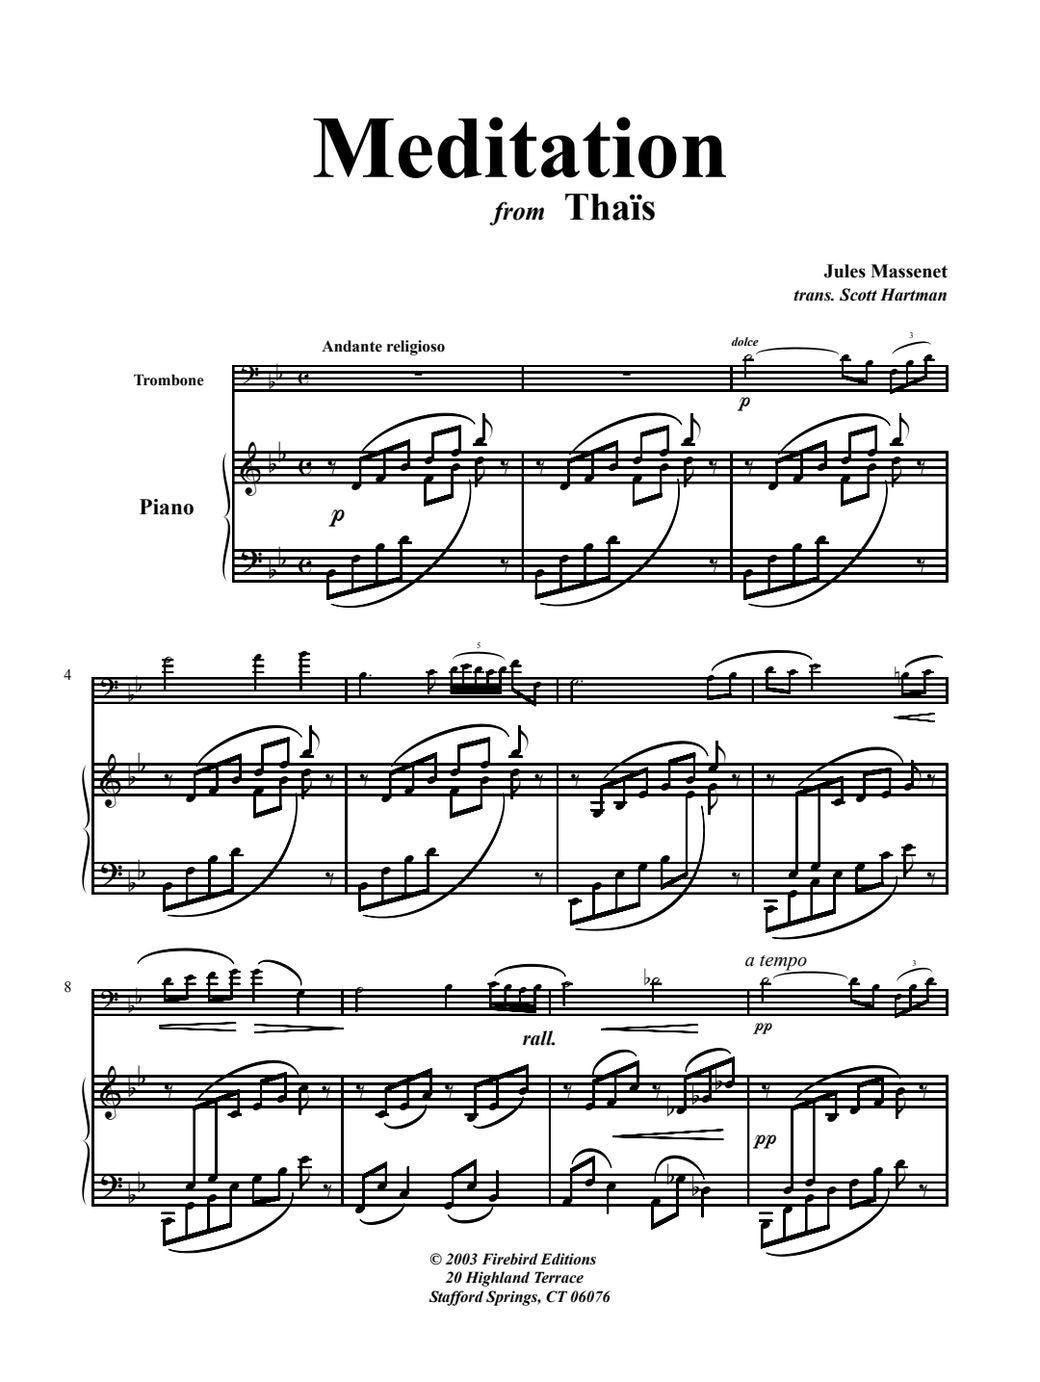 Massenet arr. Hartman: Meditation from Thais for Tenor Trombone and Piano